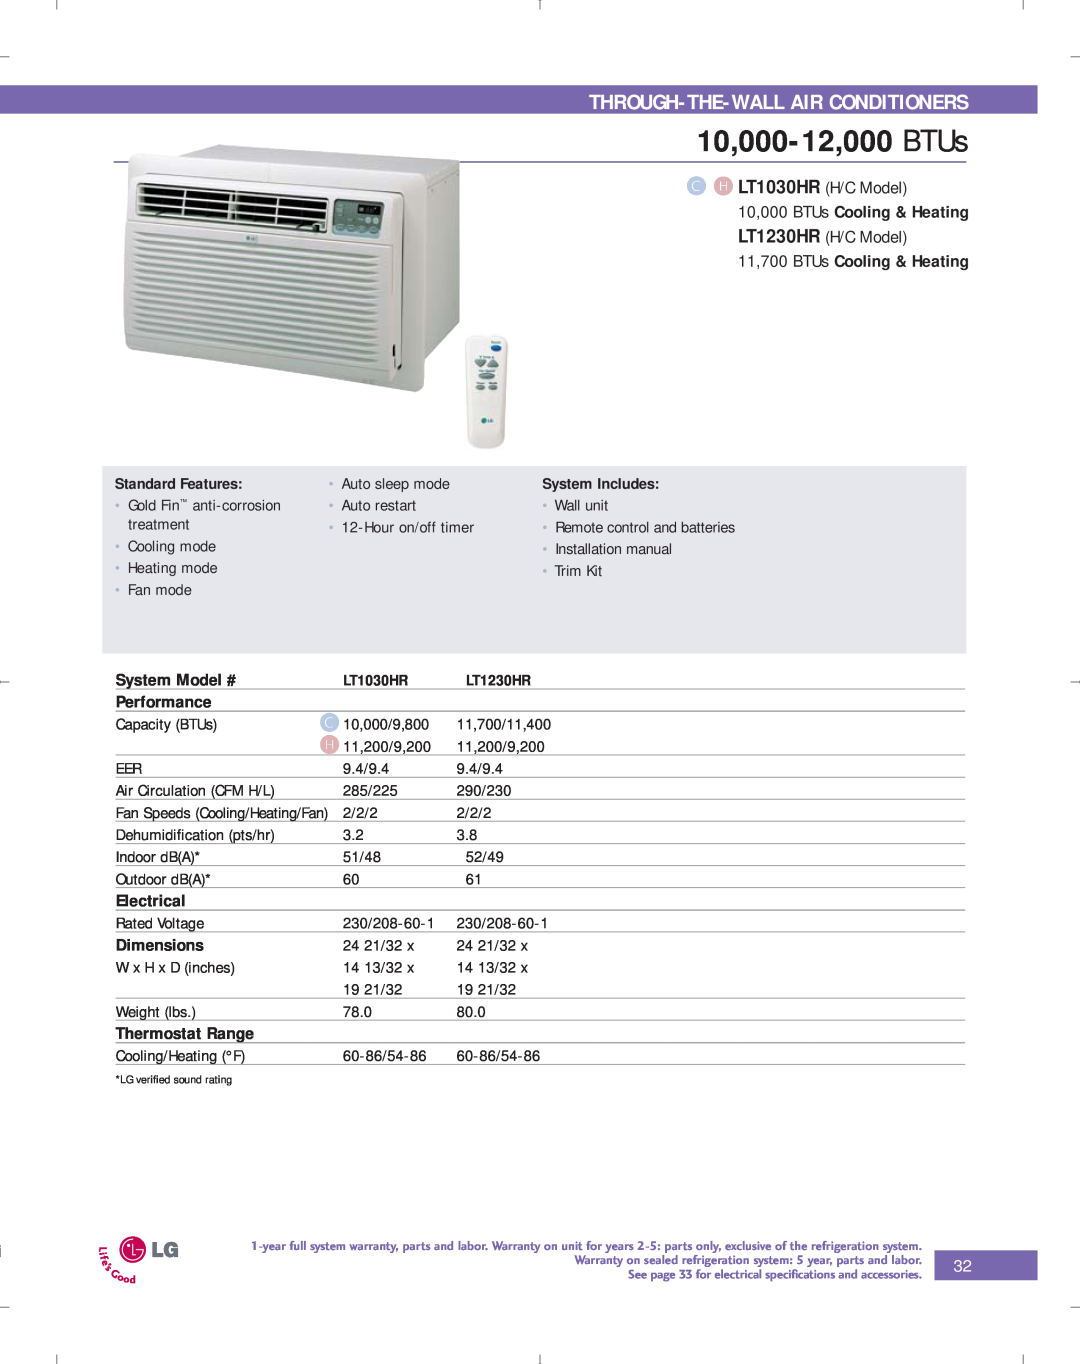 LG Electronics PG-100-2006-VER3 manual 10,000-12,000 BTUs, 10,000 BTUs Cooling & Heating, 11,700 BTUs Cooling & Heating 